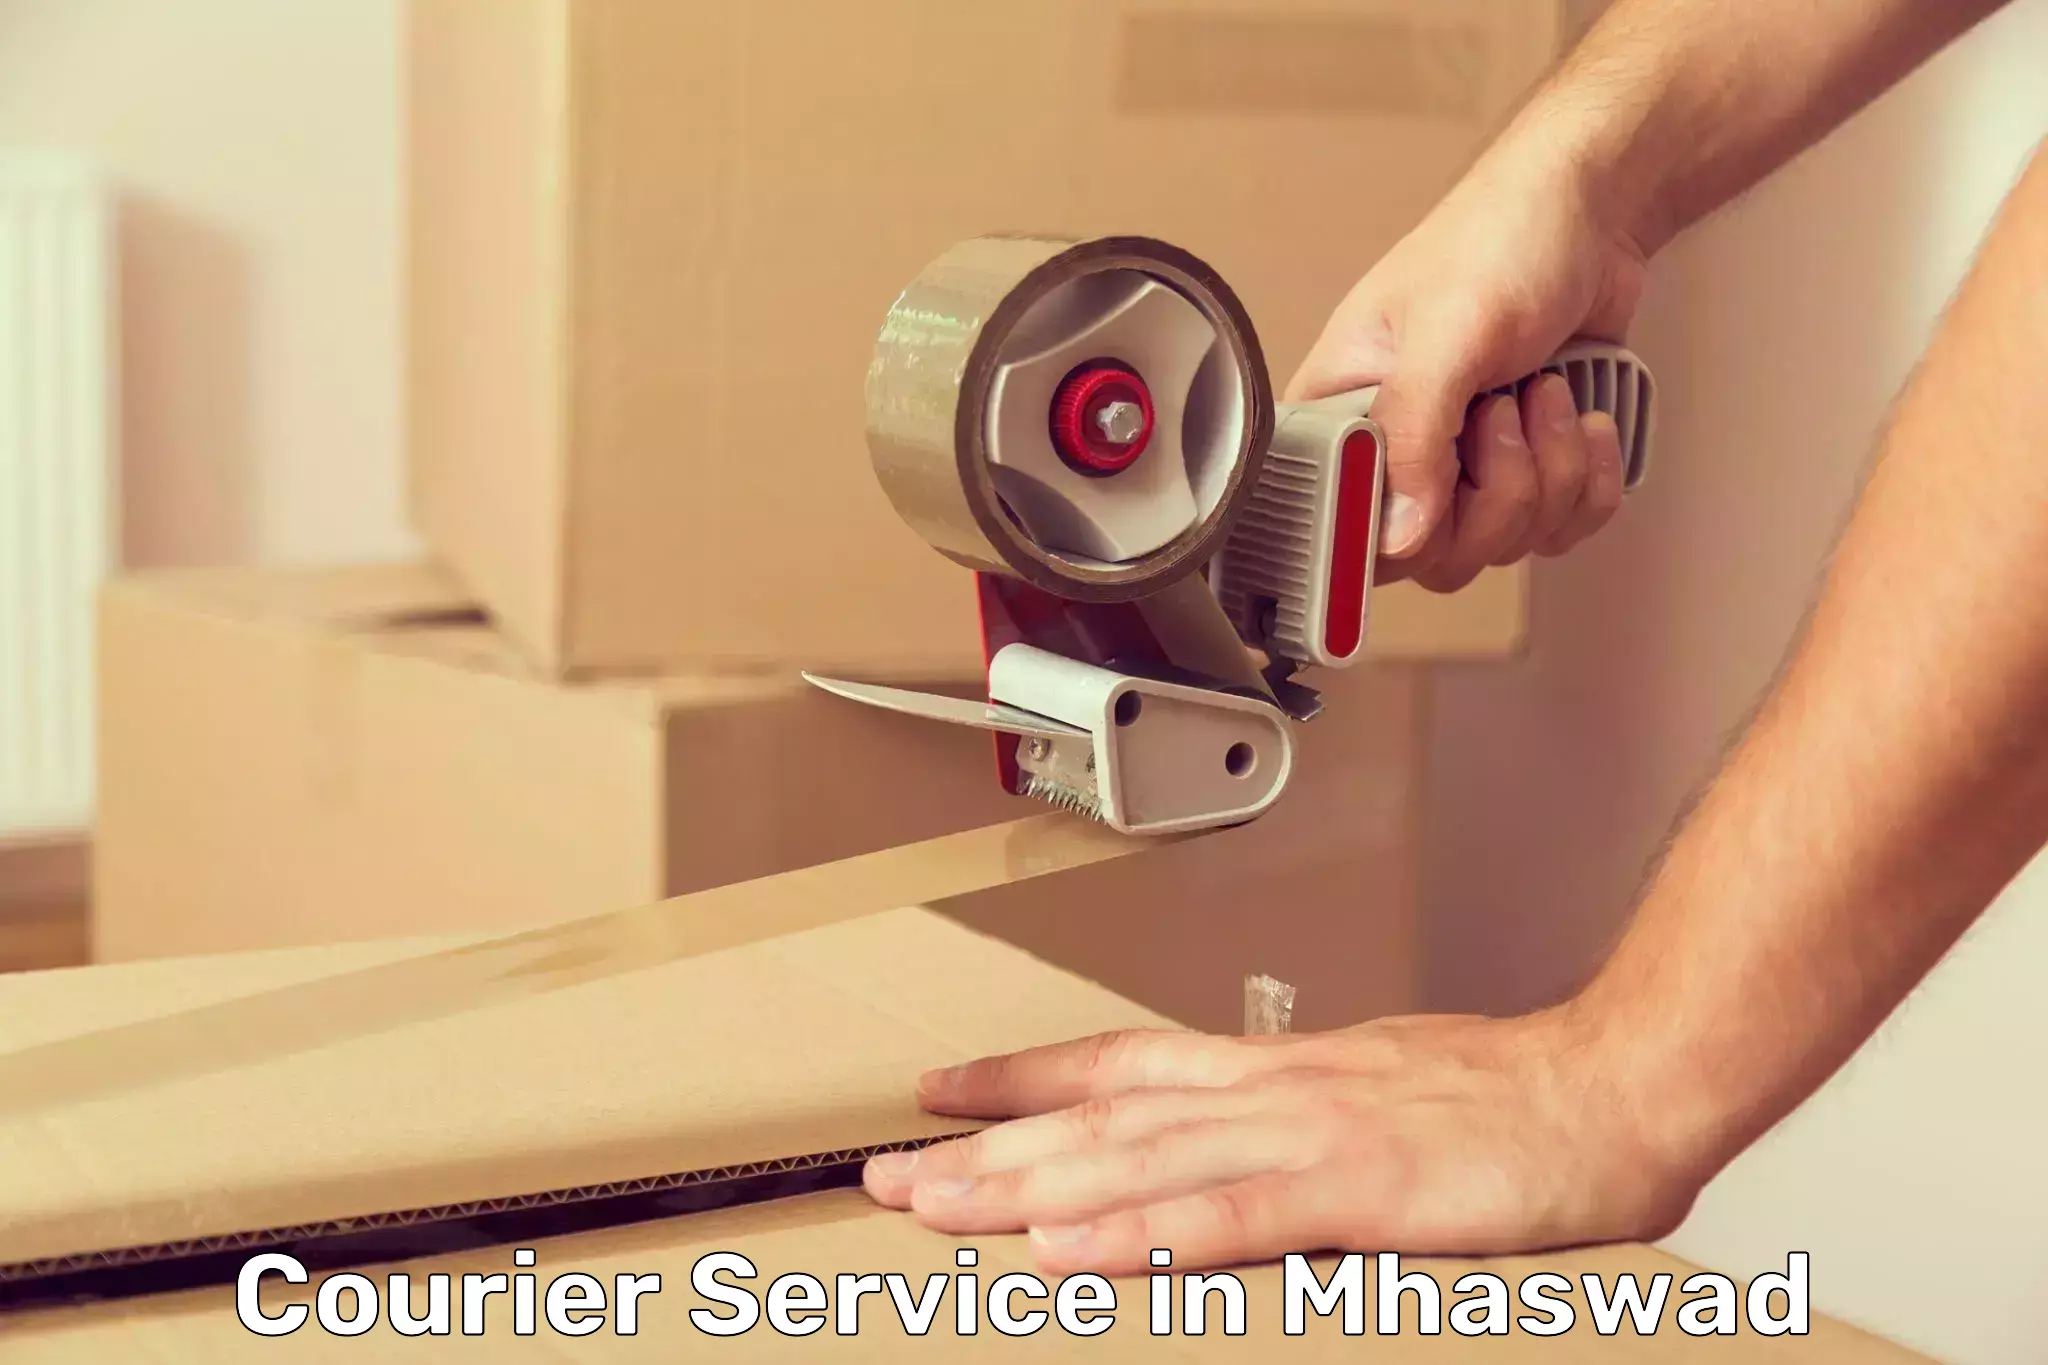 Urban courier service in Mhaswad